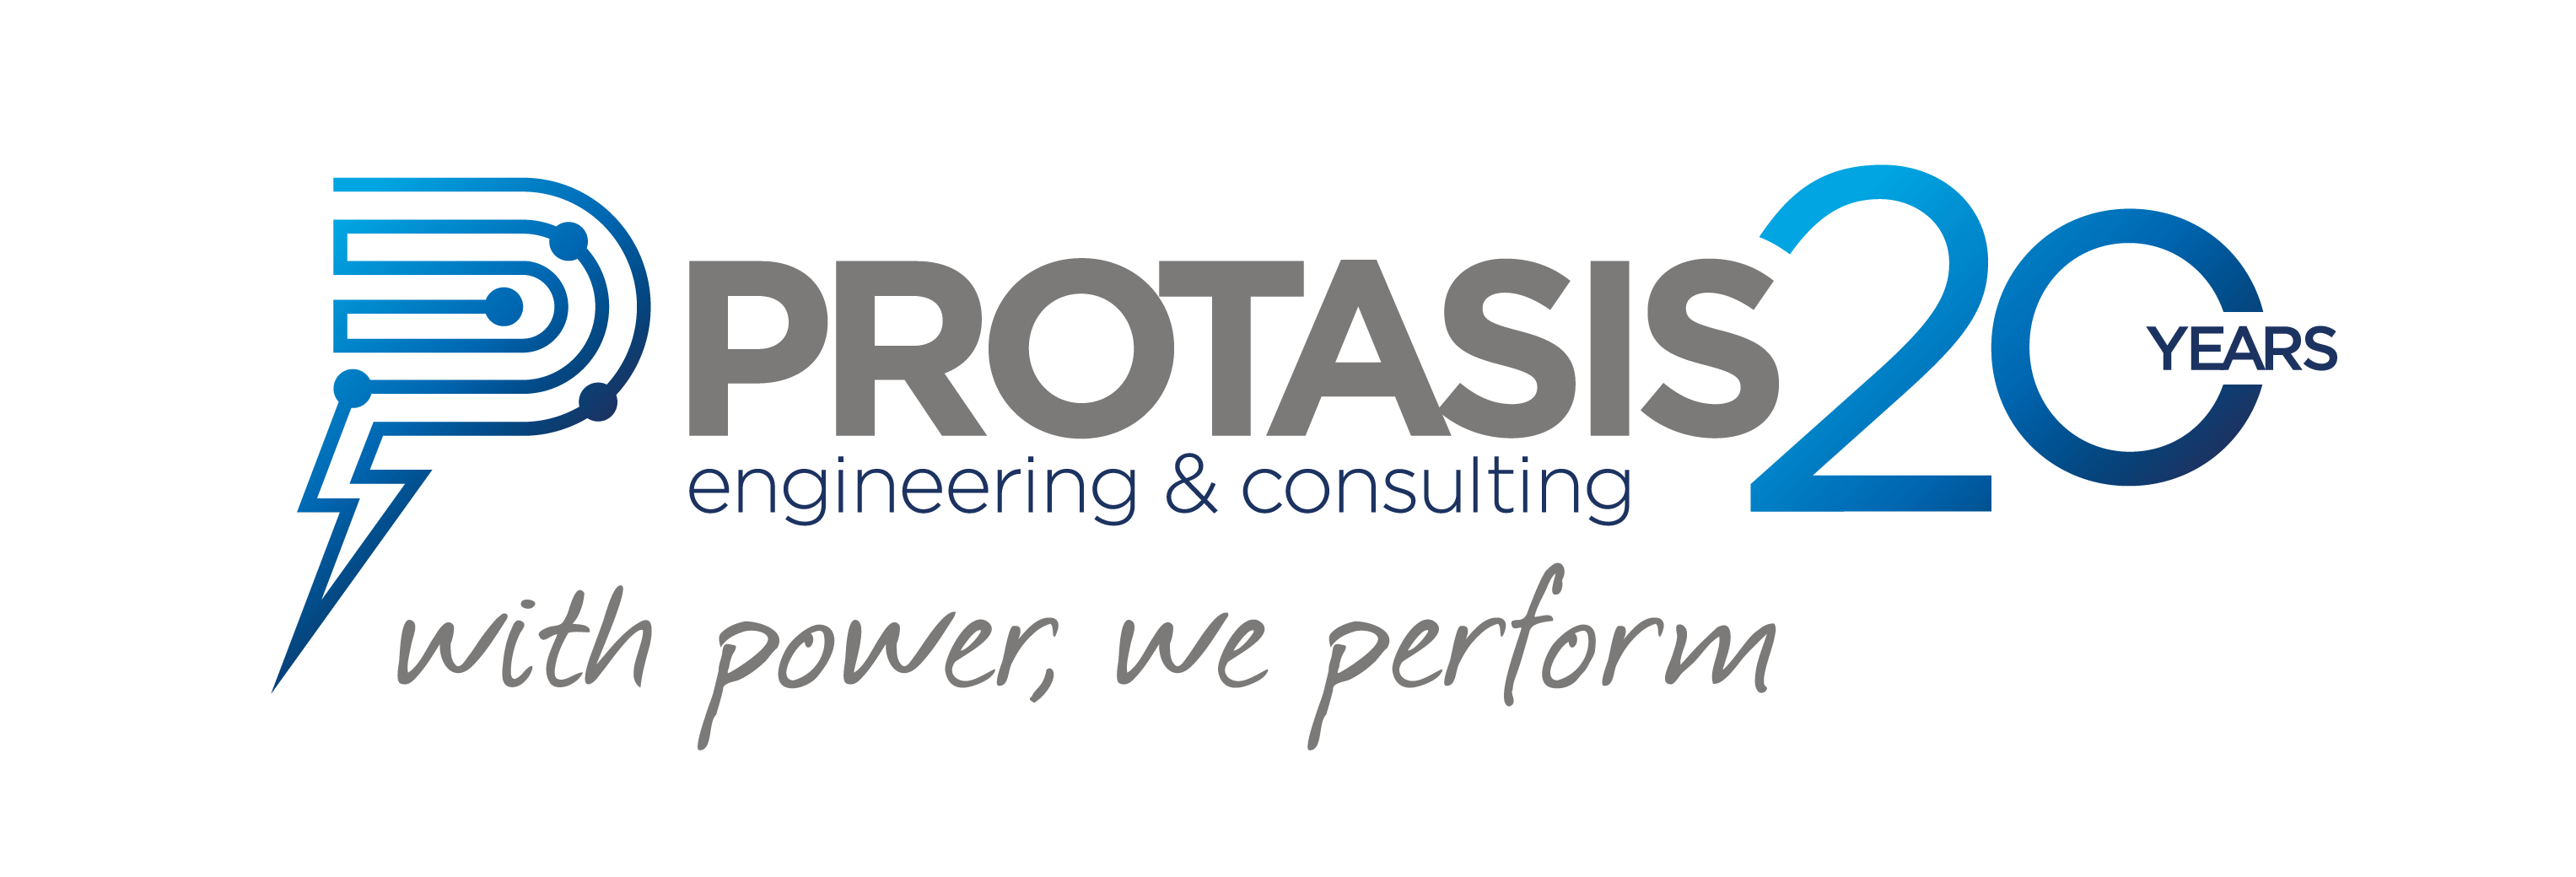 Protasis_20yrs Logo_Slogan_CMYK